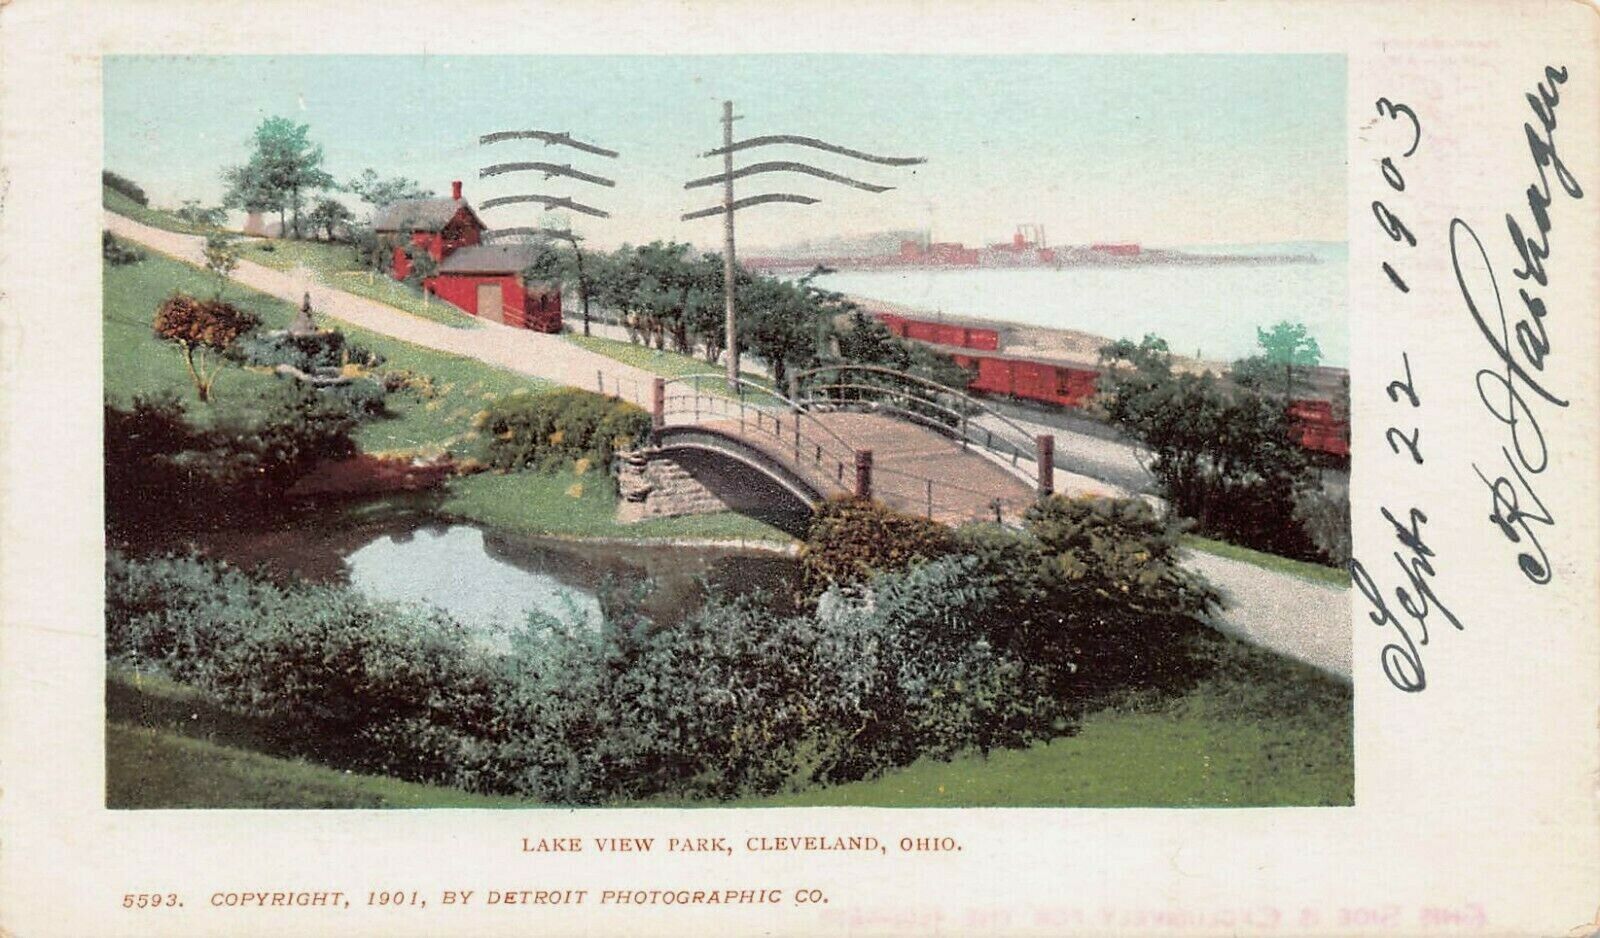 Lake View Park, Cleveland, Ohio, 1901 Postcard, Detroit Photographic Co., Used